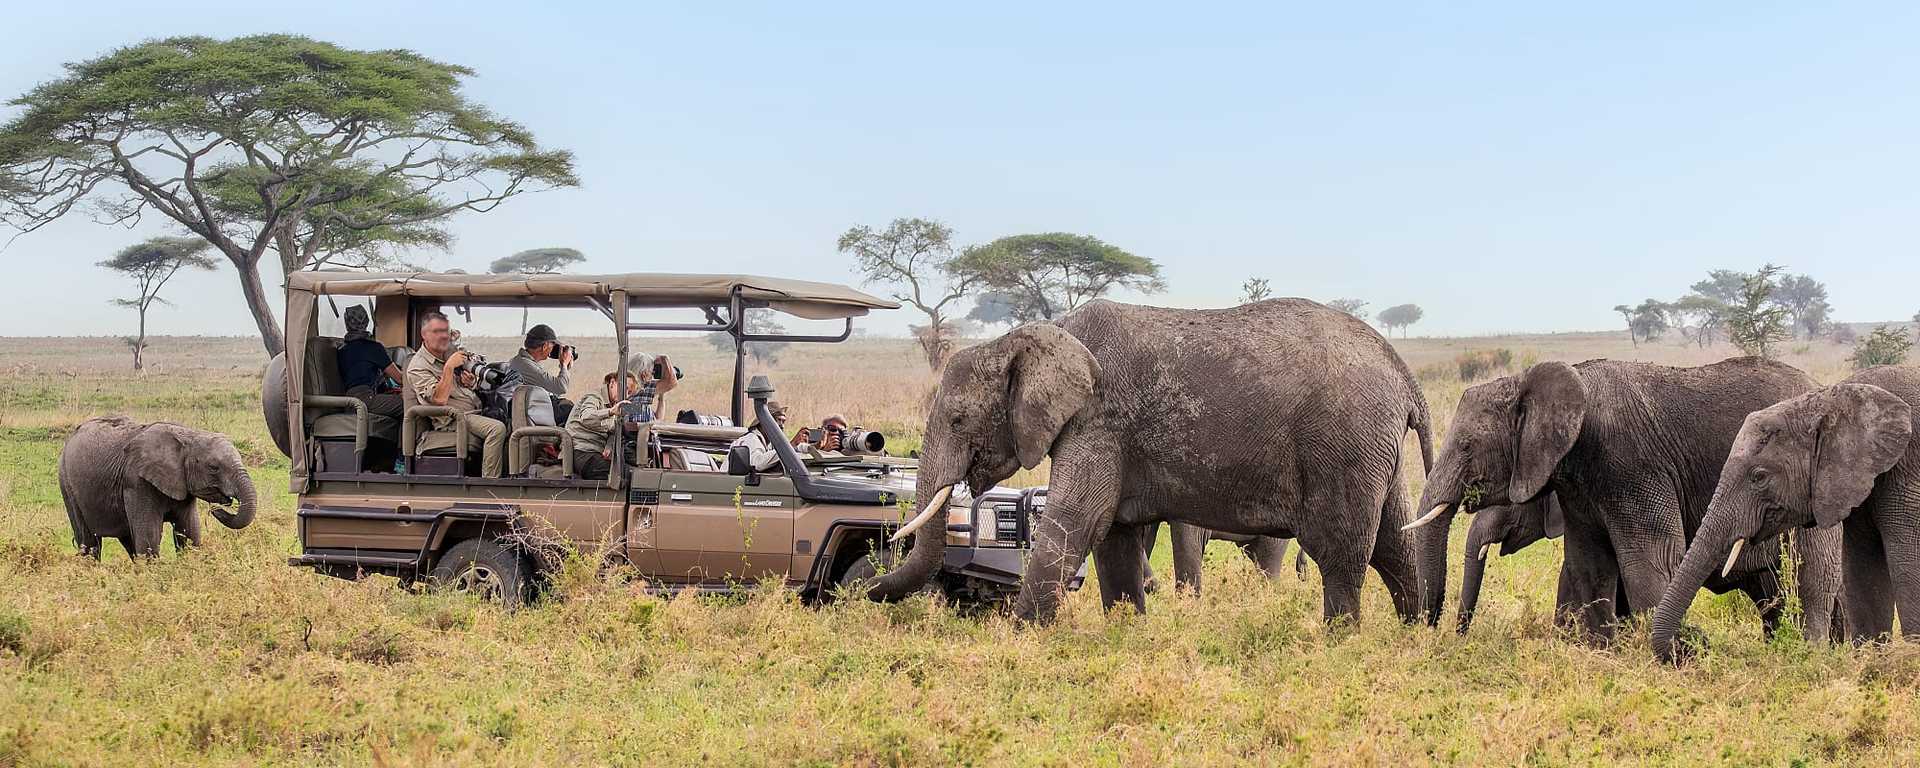 Travelers on African safari game drive photographing elephants close up in Eastern Serengeti, Tanzania